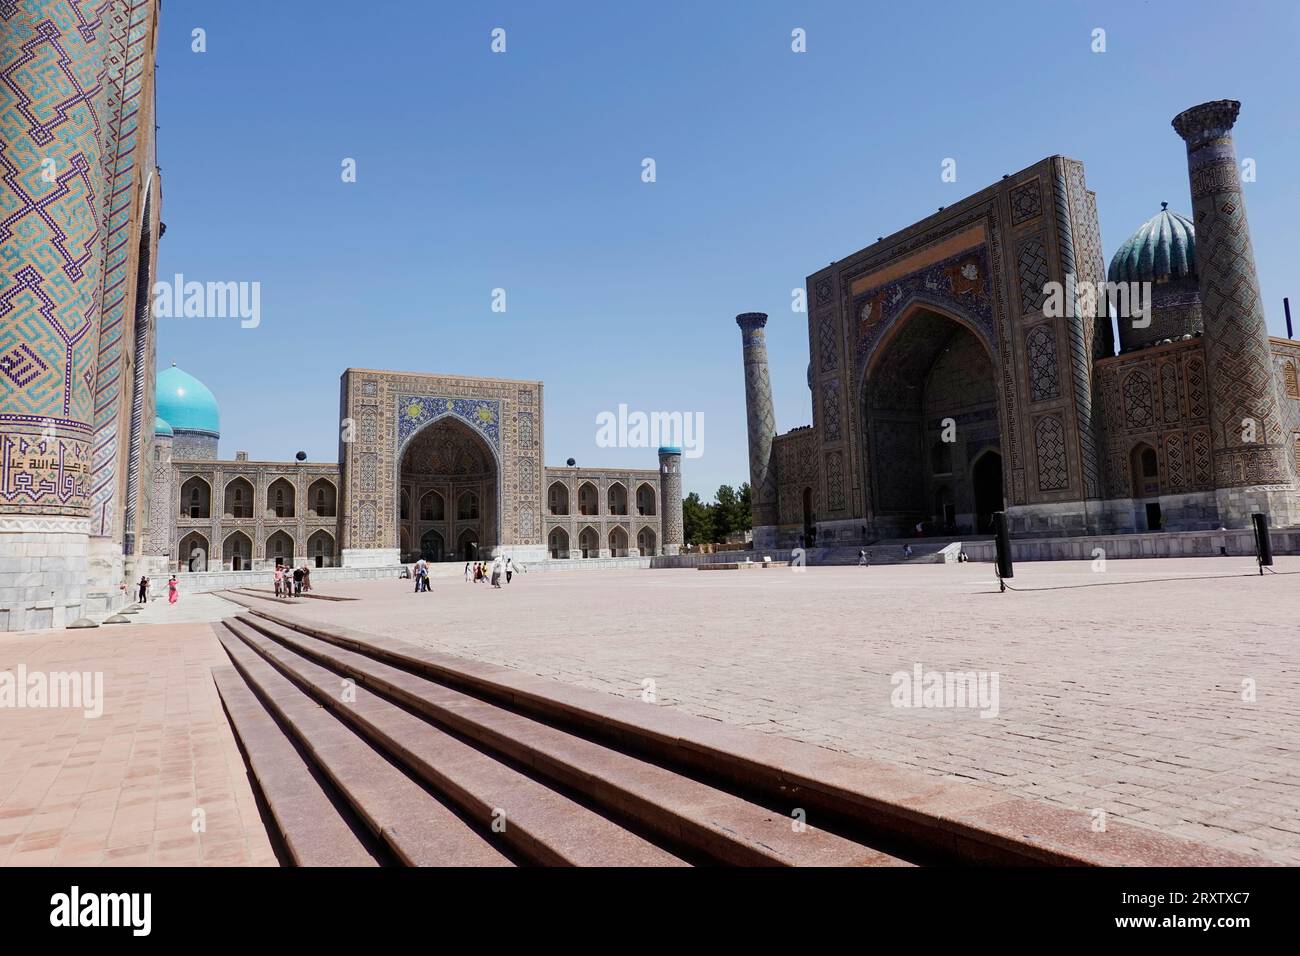 The world-famous Islamic architecture of Samarkand, UNESCO World Heritage Site, Uzbekistan, Central Asia, Asia Stock Photo